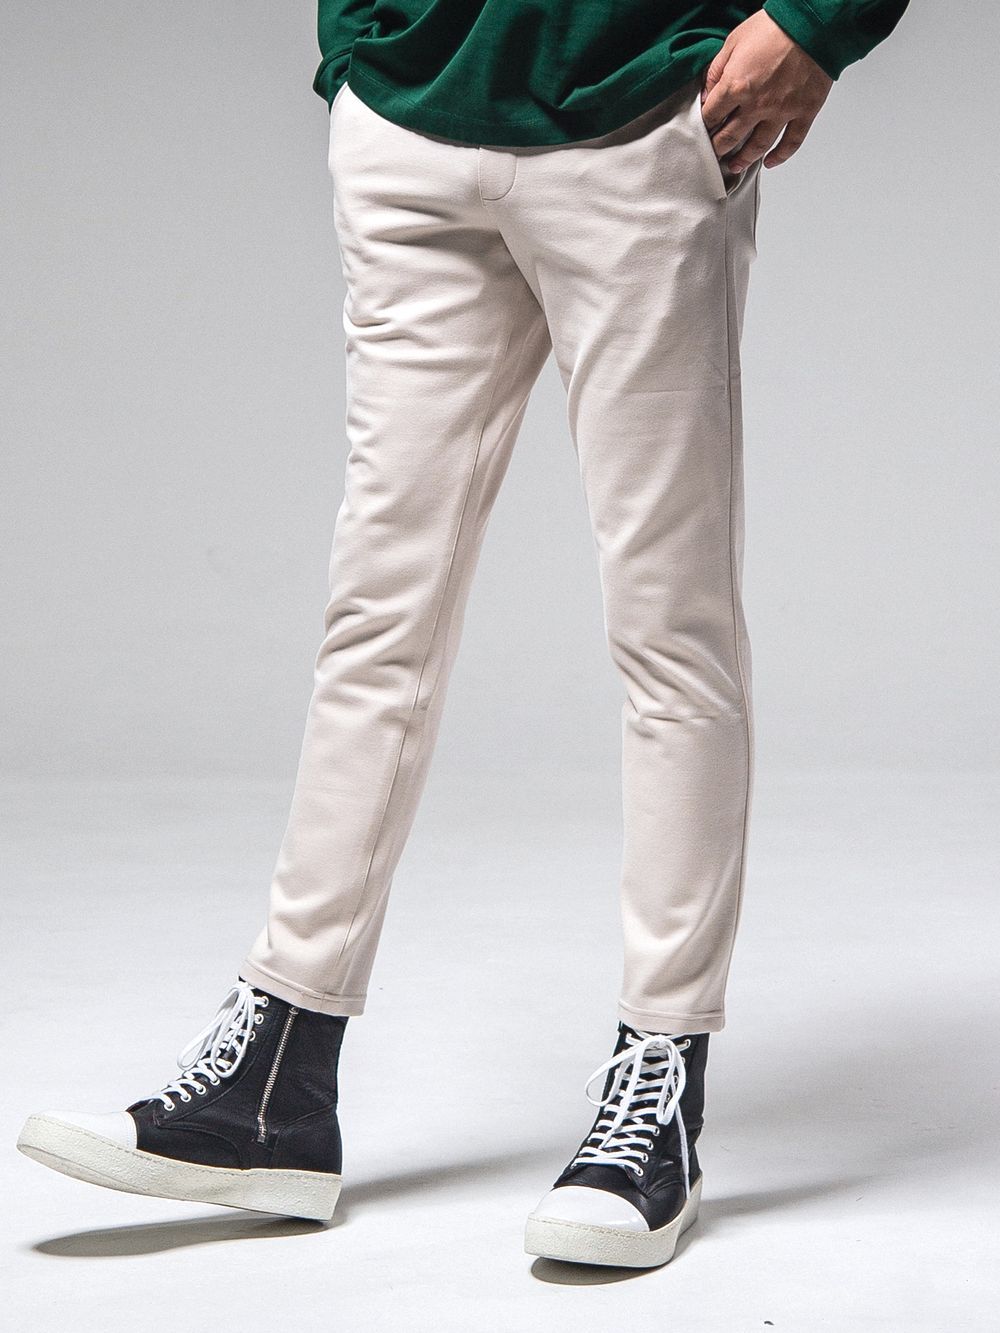 RESOUND CLOTHING - ERIC EASY PANTS BLACK (オフホワイト) スラックス 